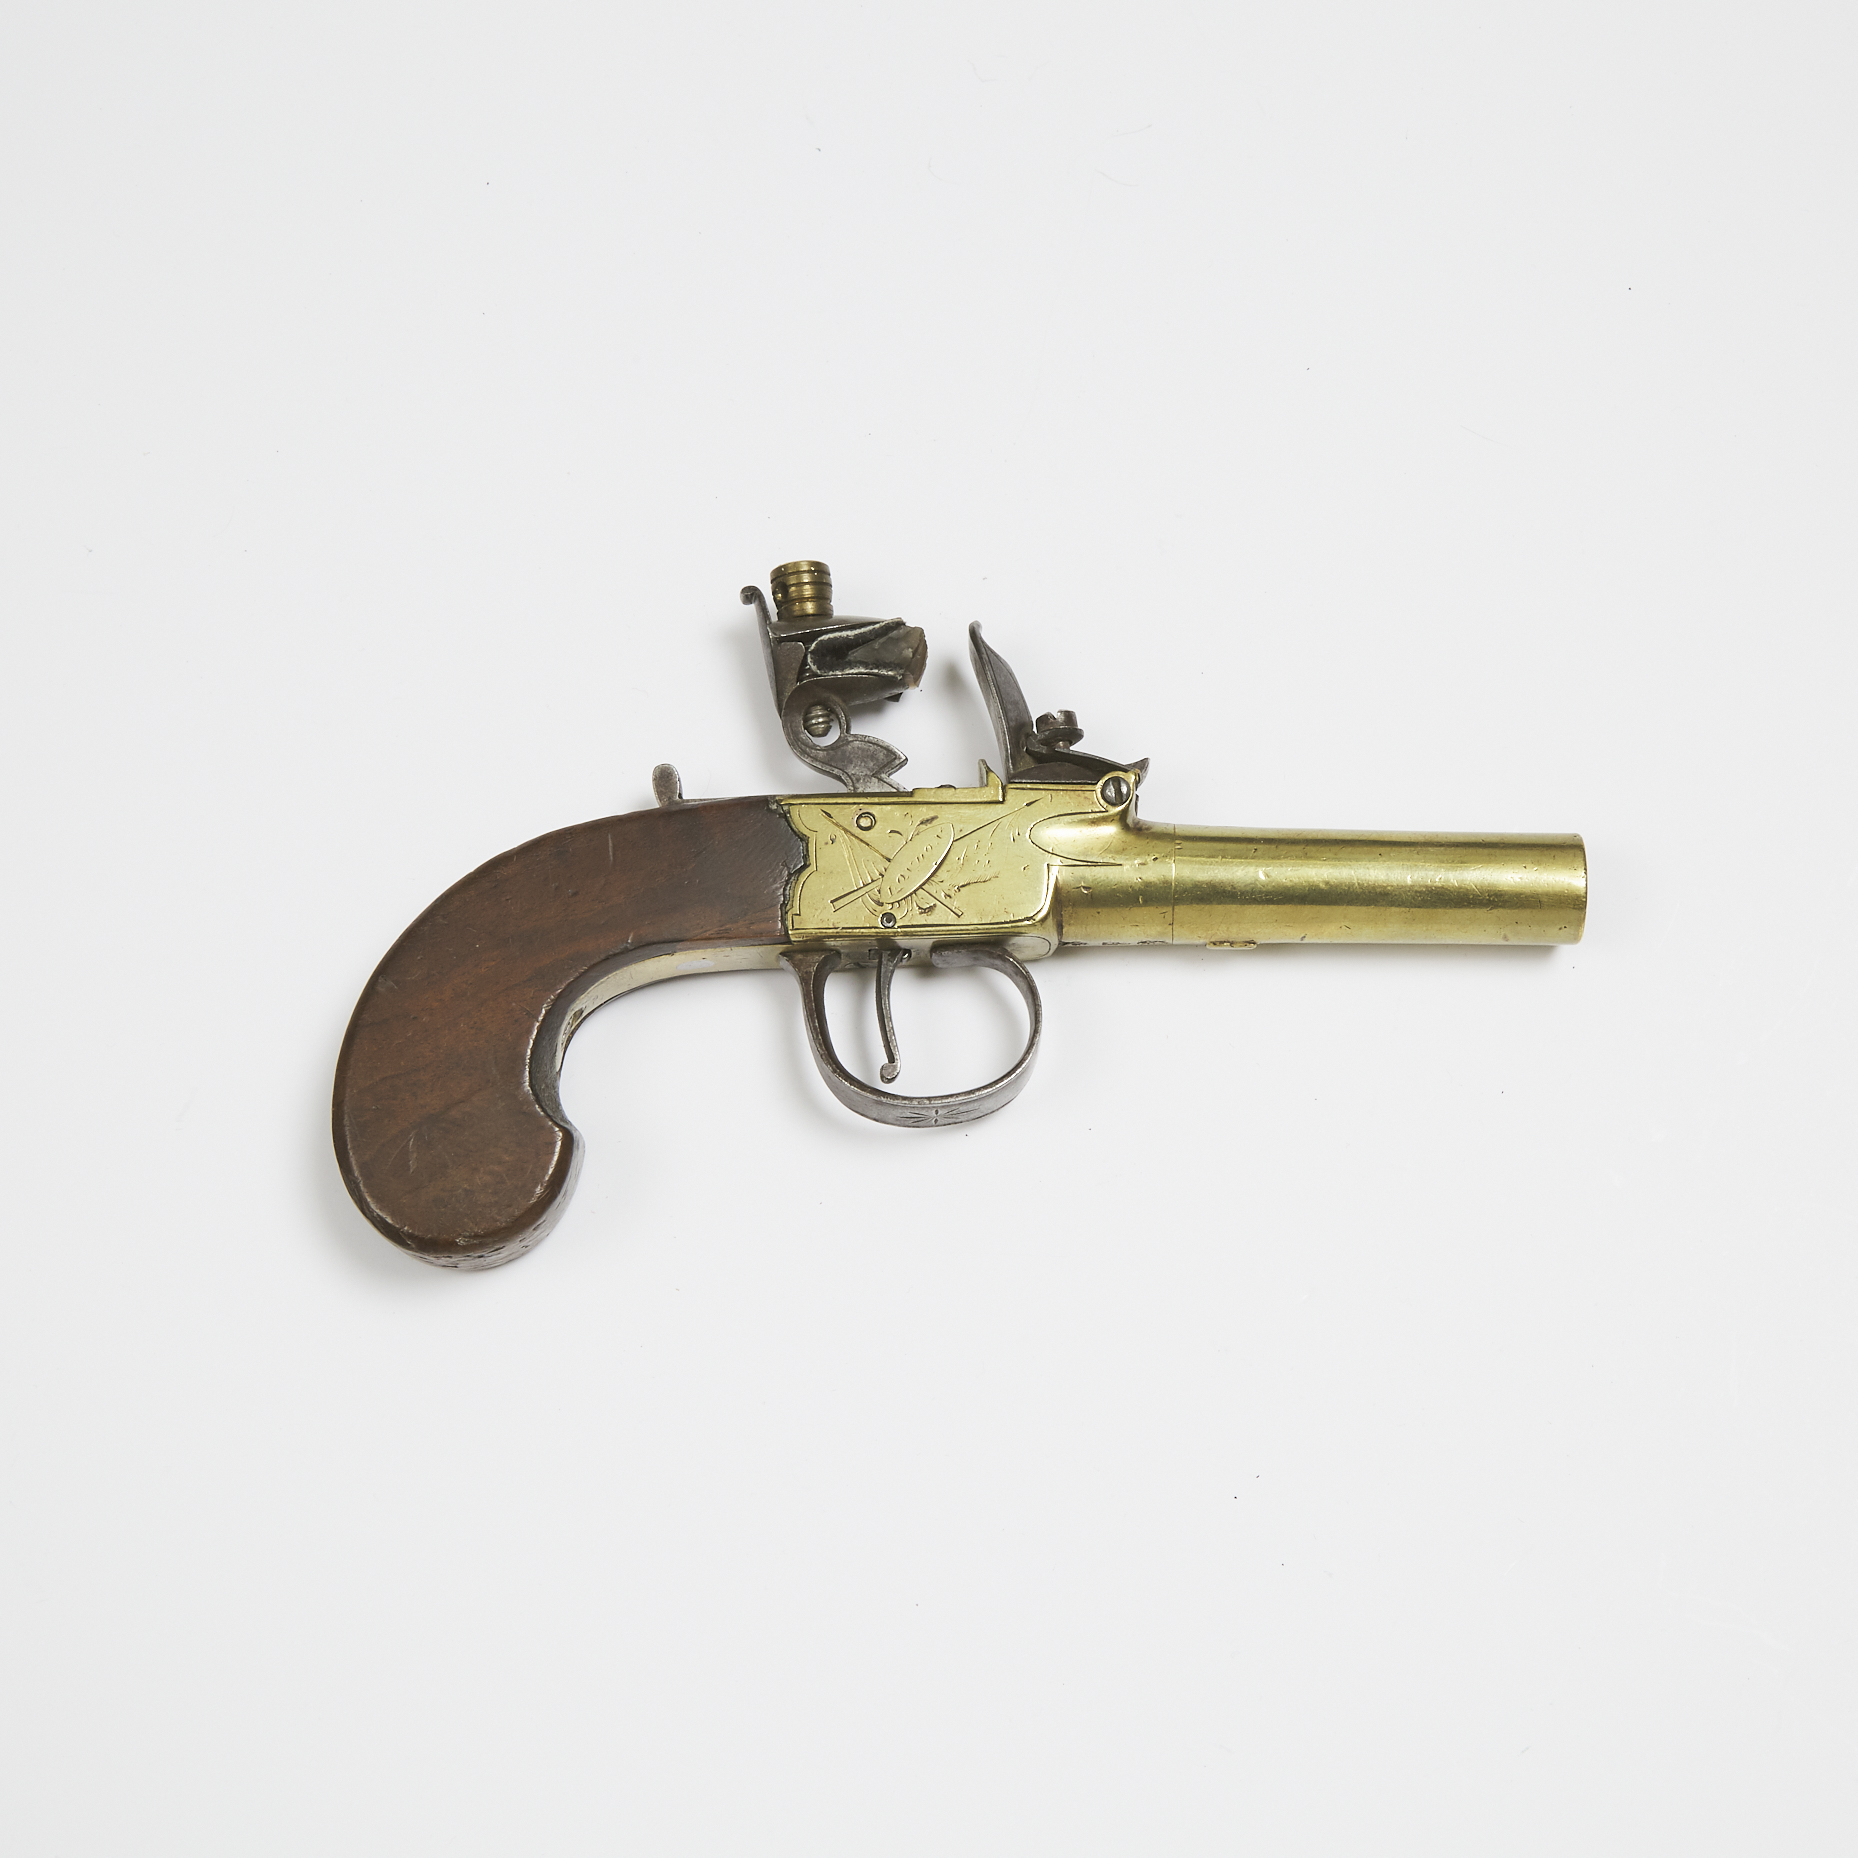 British Flint-Boxlock Pocket Pistol, Spencer, London, early 19th century